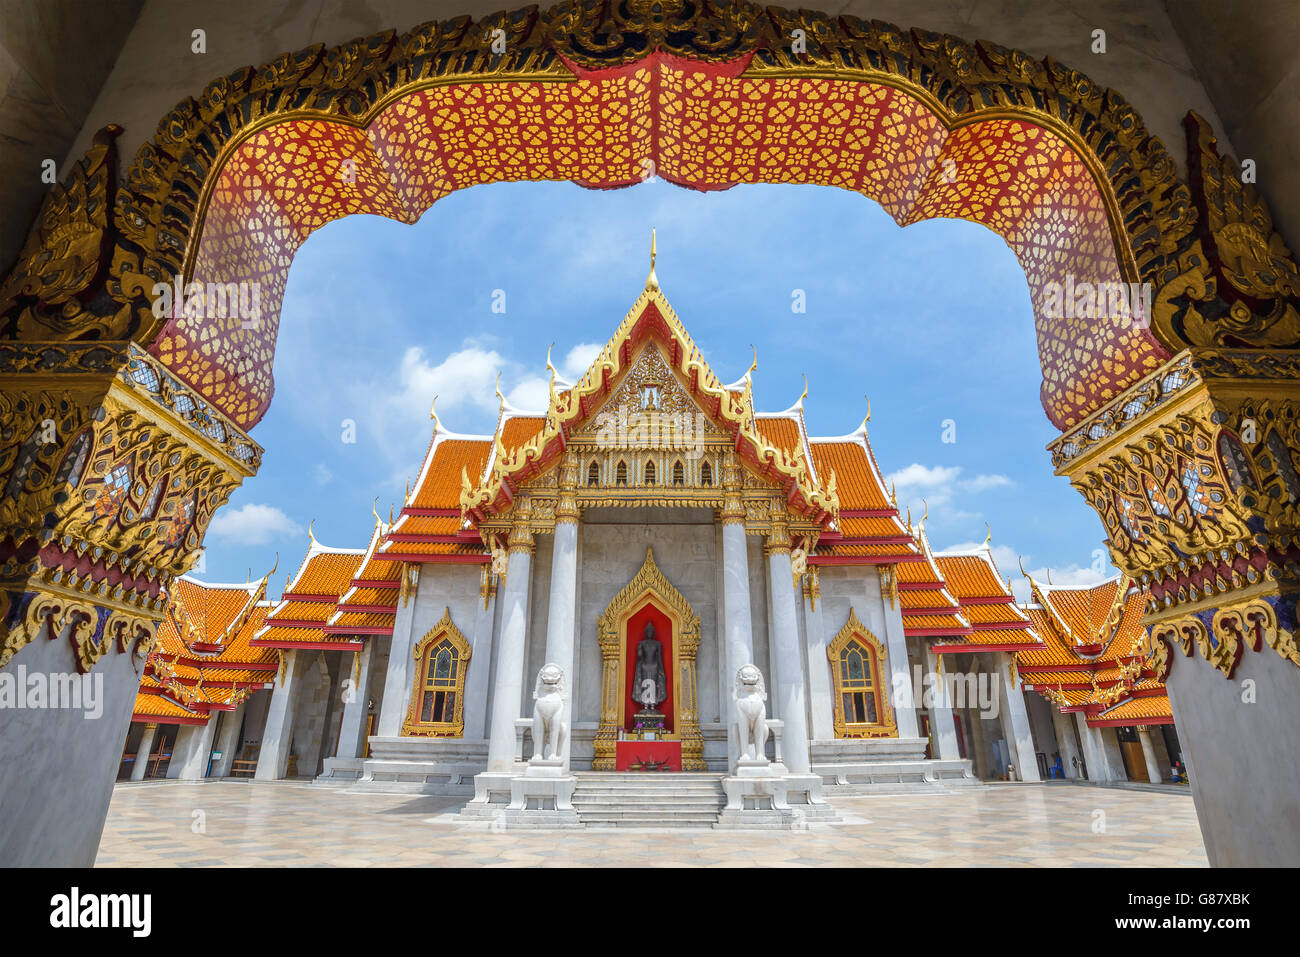 The Marble Temple or Wat Benchamabophit, Bangkok, Thailand Stock Photo